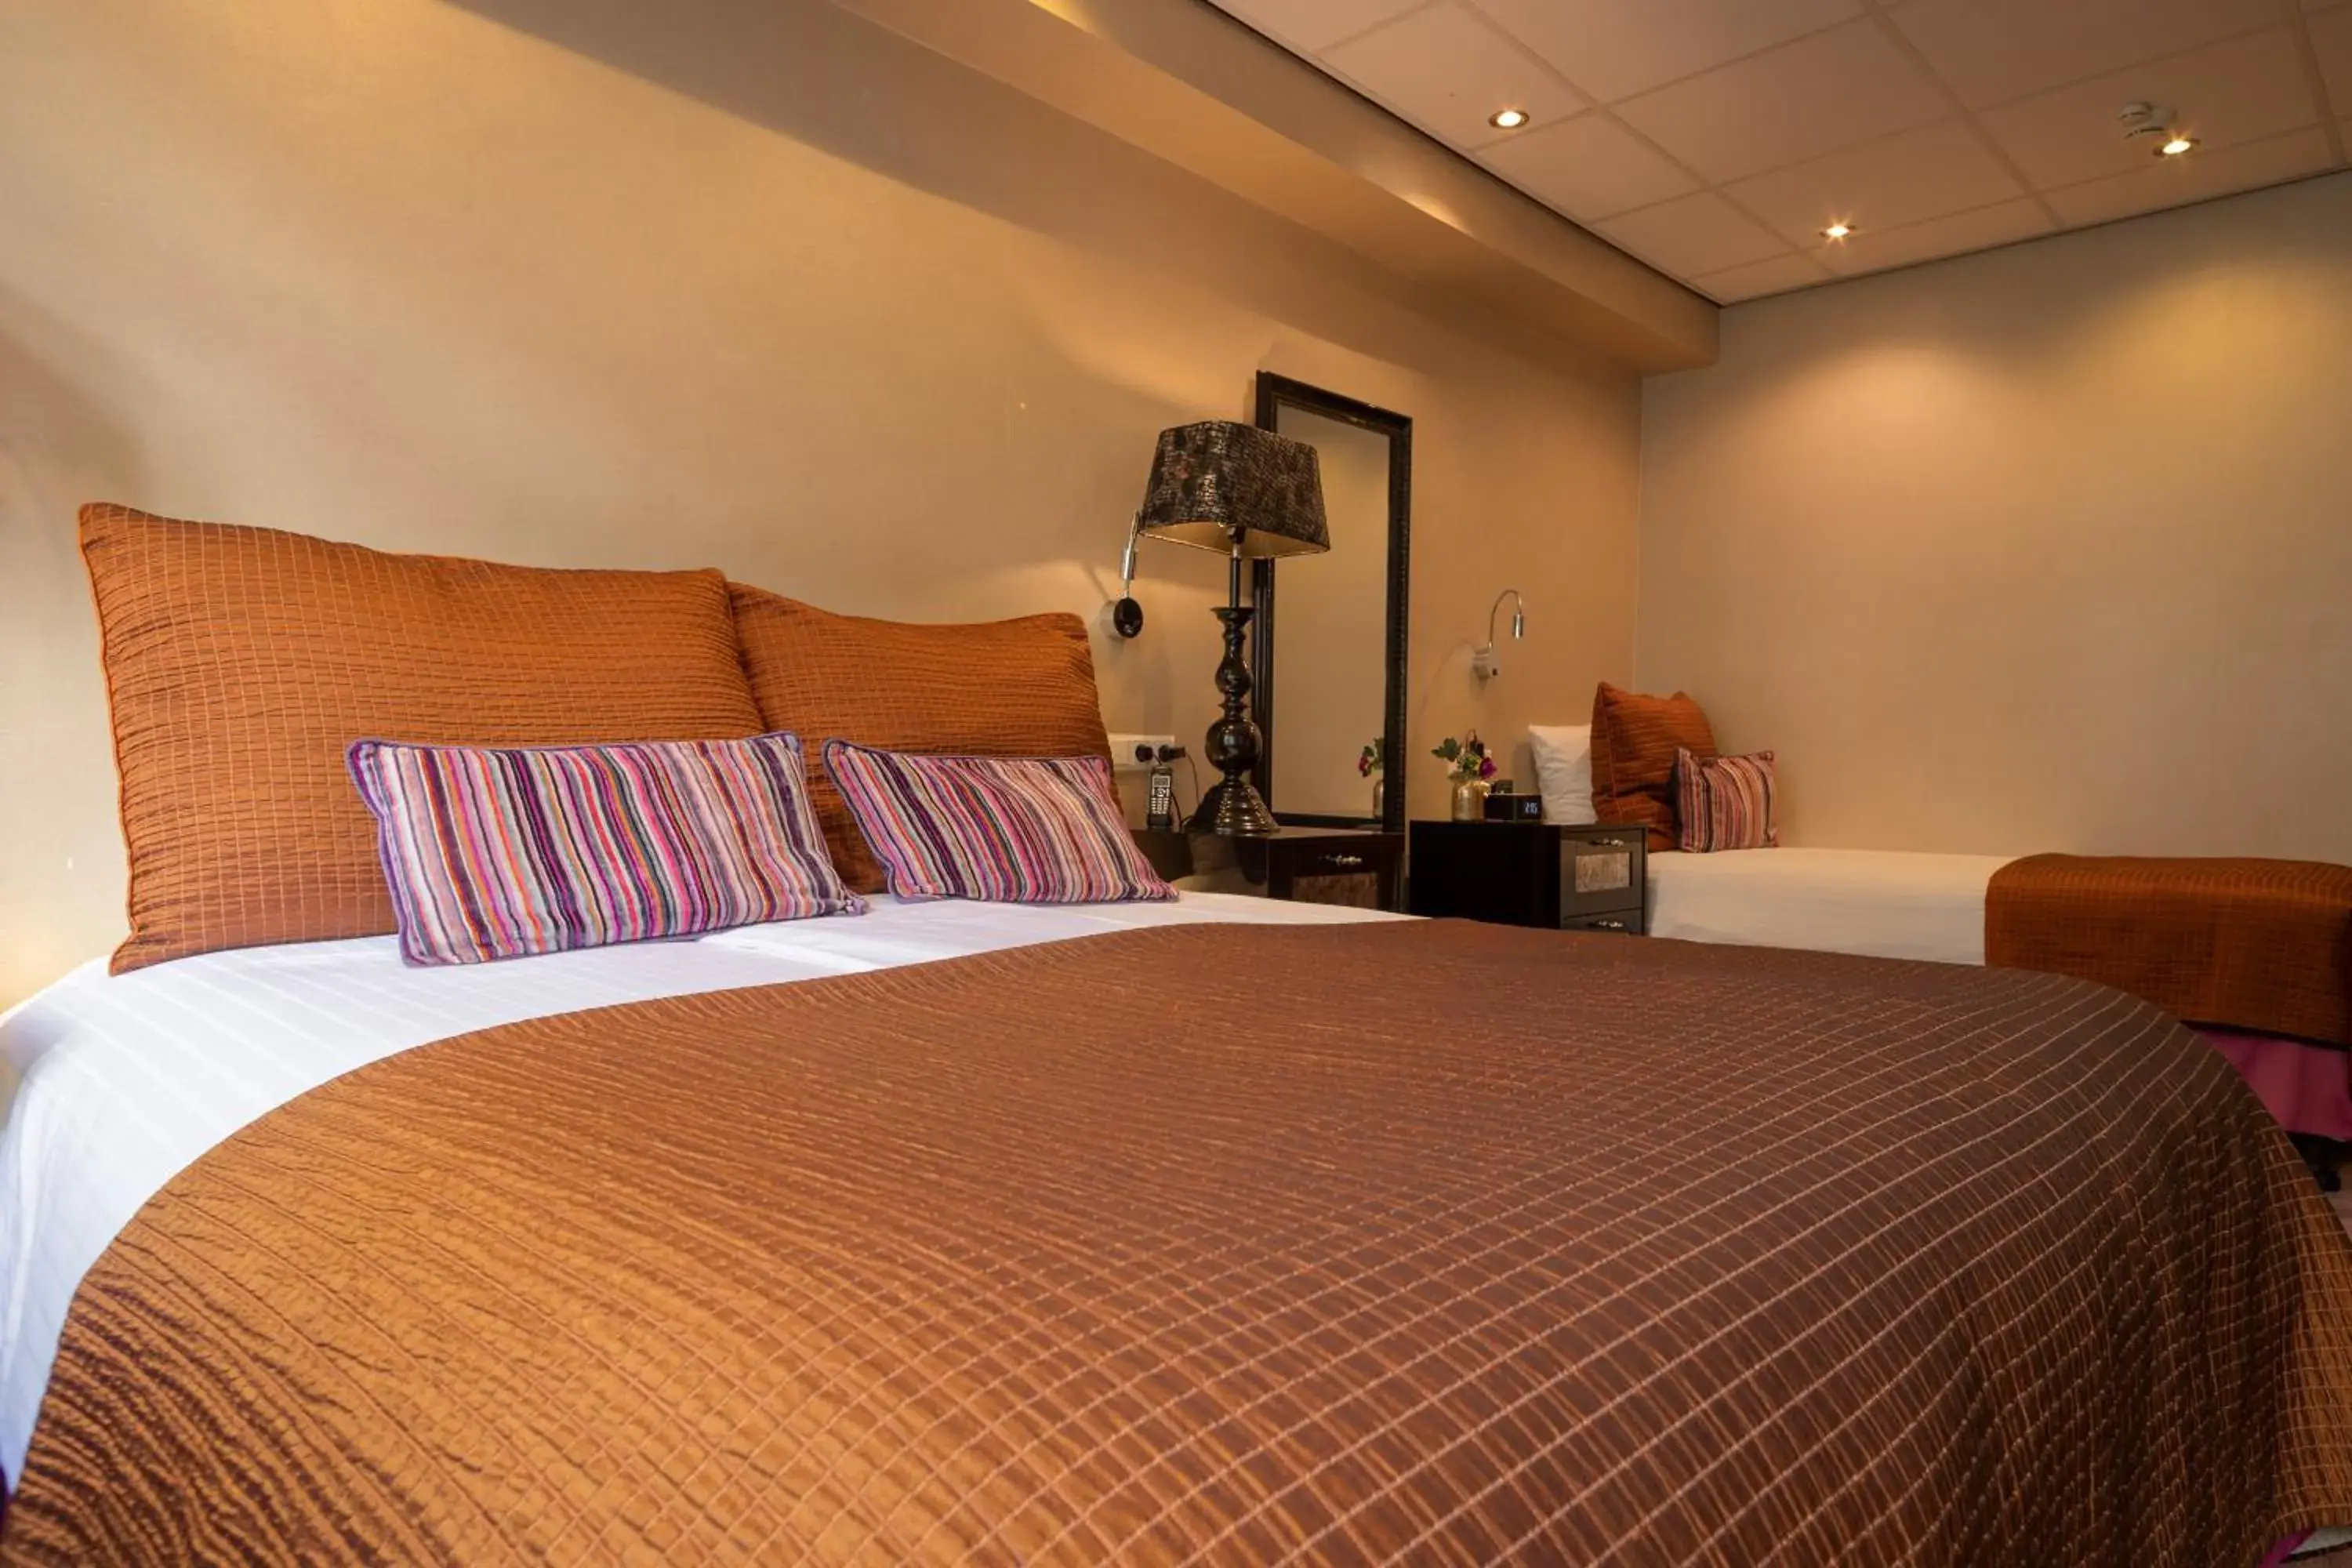 Bed, Room Photo in Hotel Sebastians